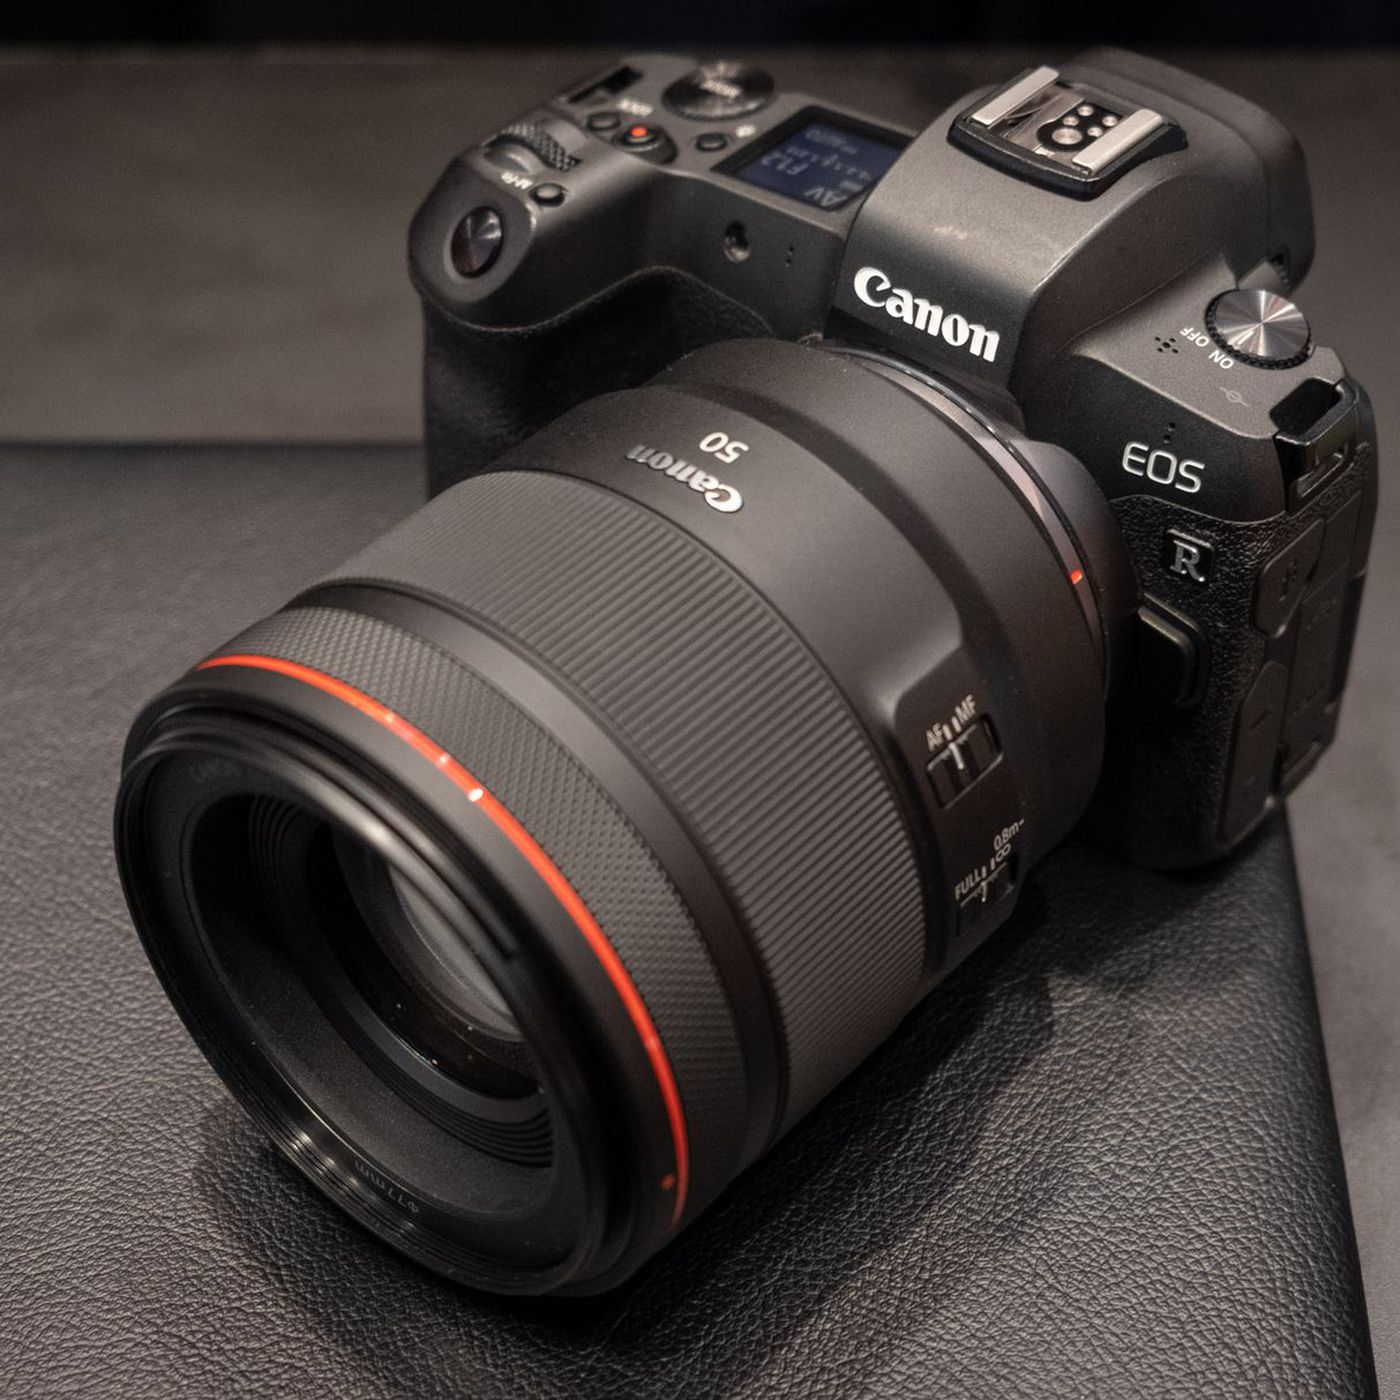 Susteen moeilijk Verlammen Canon confirms plans for 8K-capable full-frame mirrorless camera - The Verge